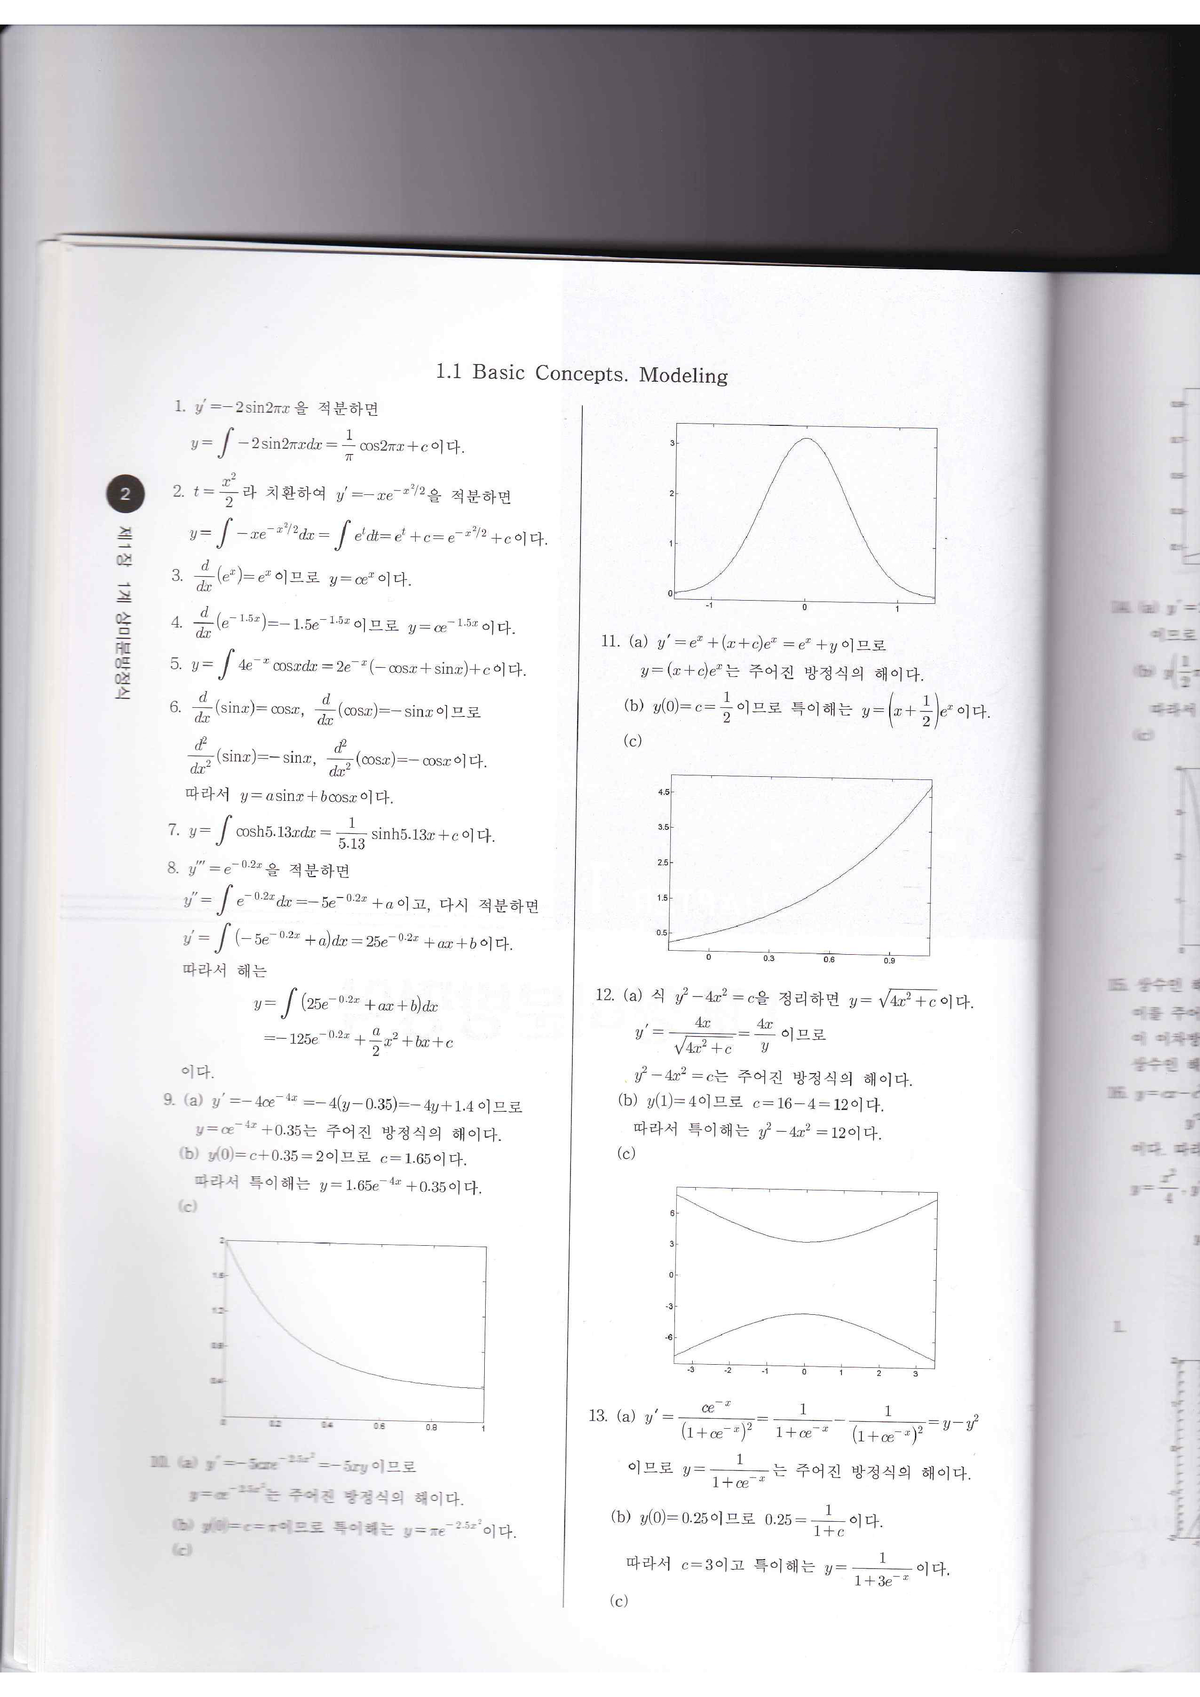 Kreyszig 공업수학 10판 솔루션 1 - 제 1장 1계 상미분방정식 연습문제 솔루션 - 공학수학1 Engineering  Mathematics - Studocu